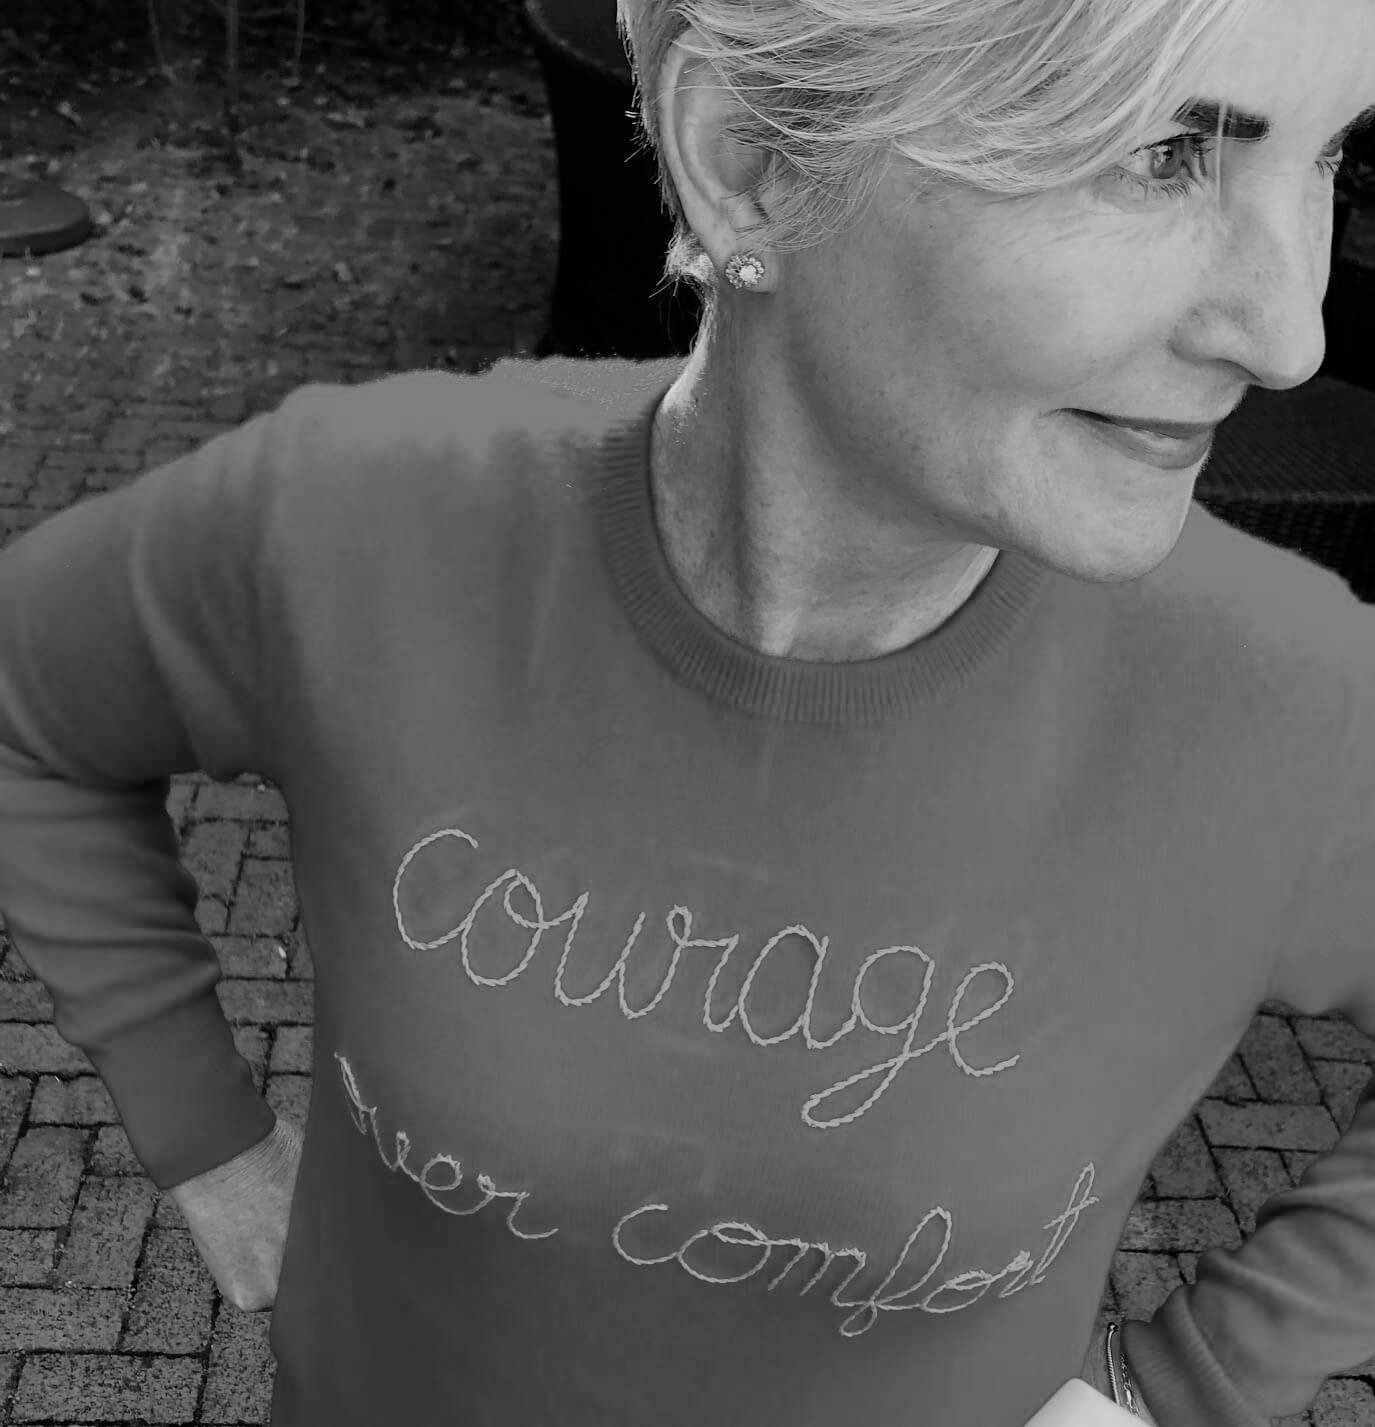 Christina Langdon - wears a shirt that says courage